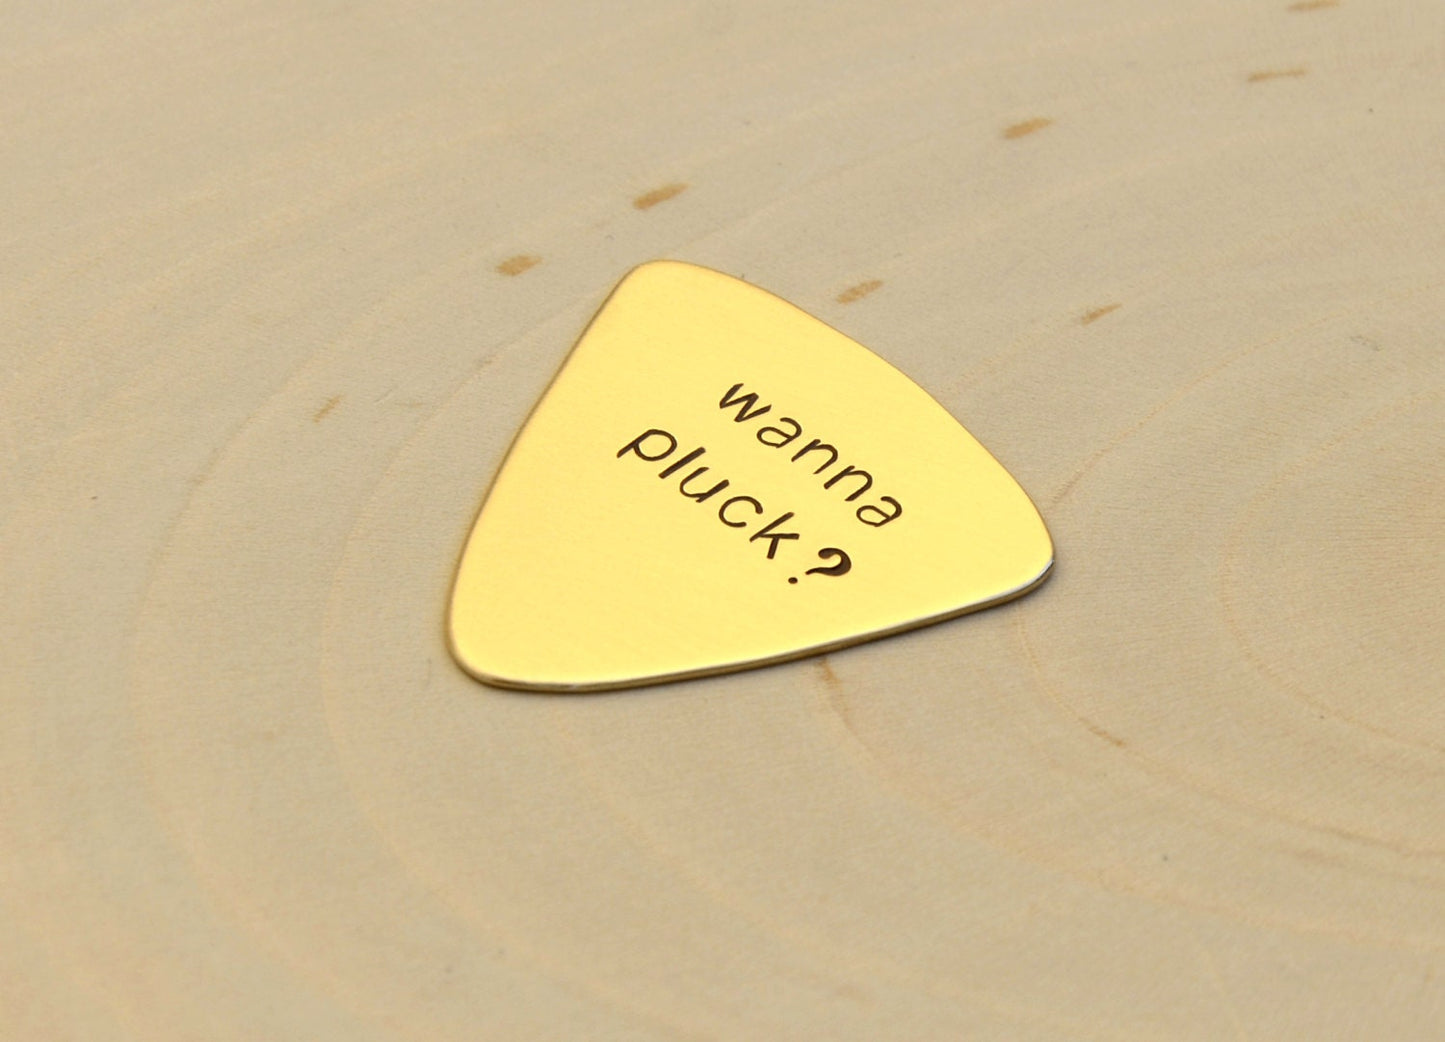 Wanna Pluck bronze triangular style guitar pick